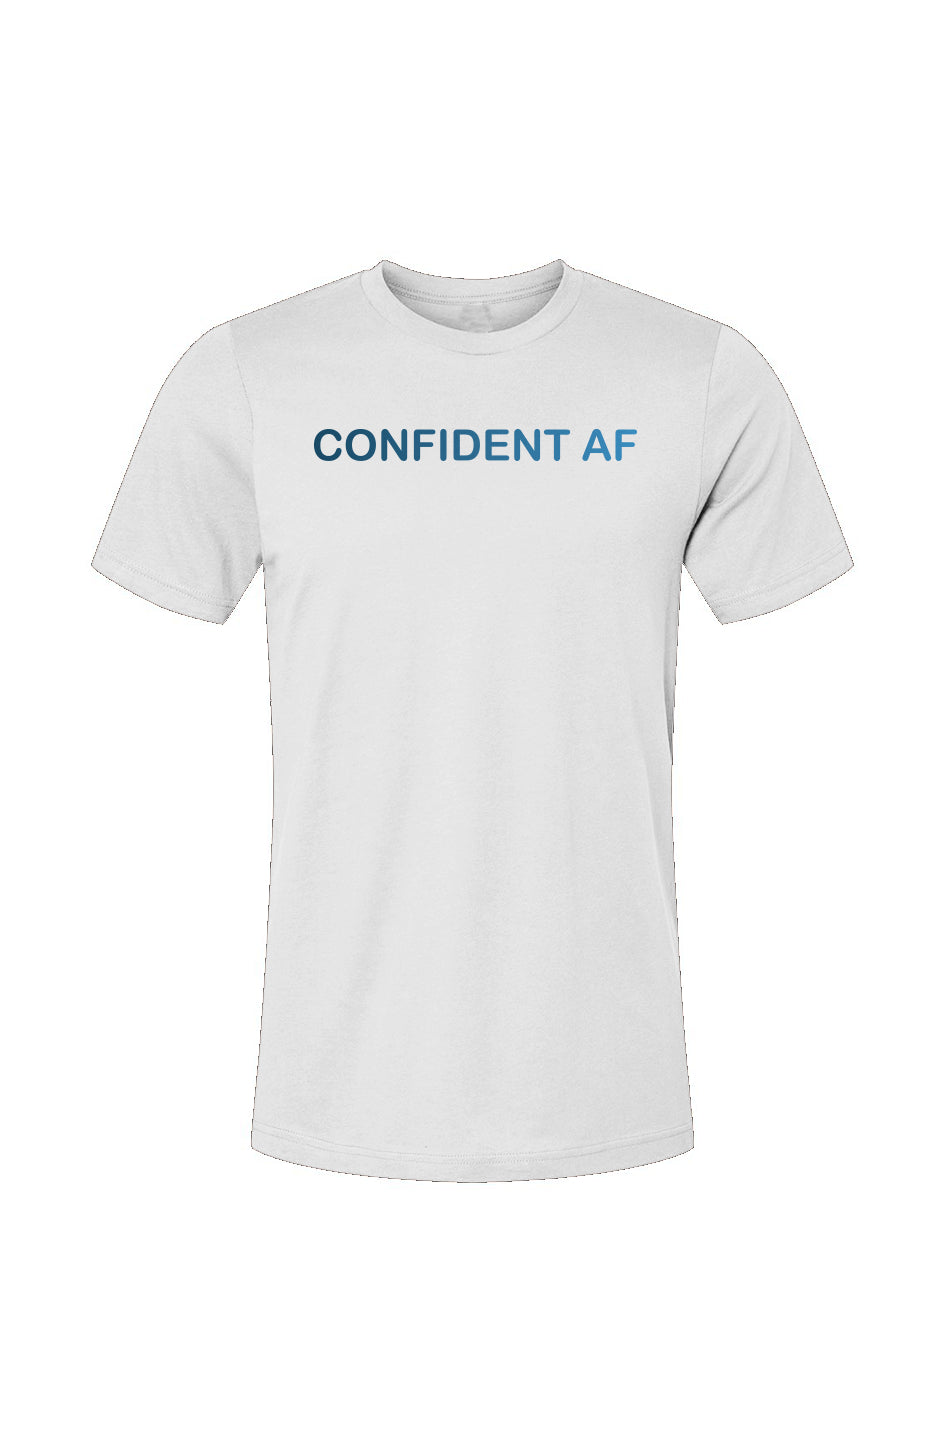 Confident AF Tee - Gradient White/Blue